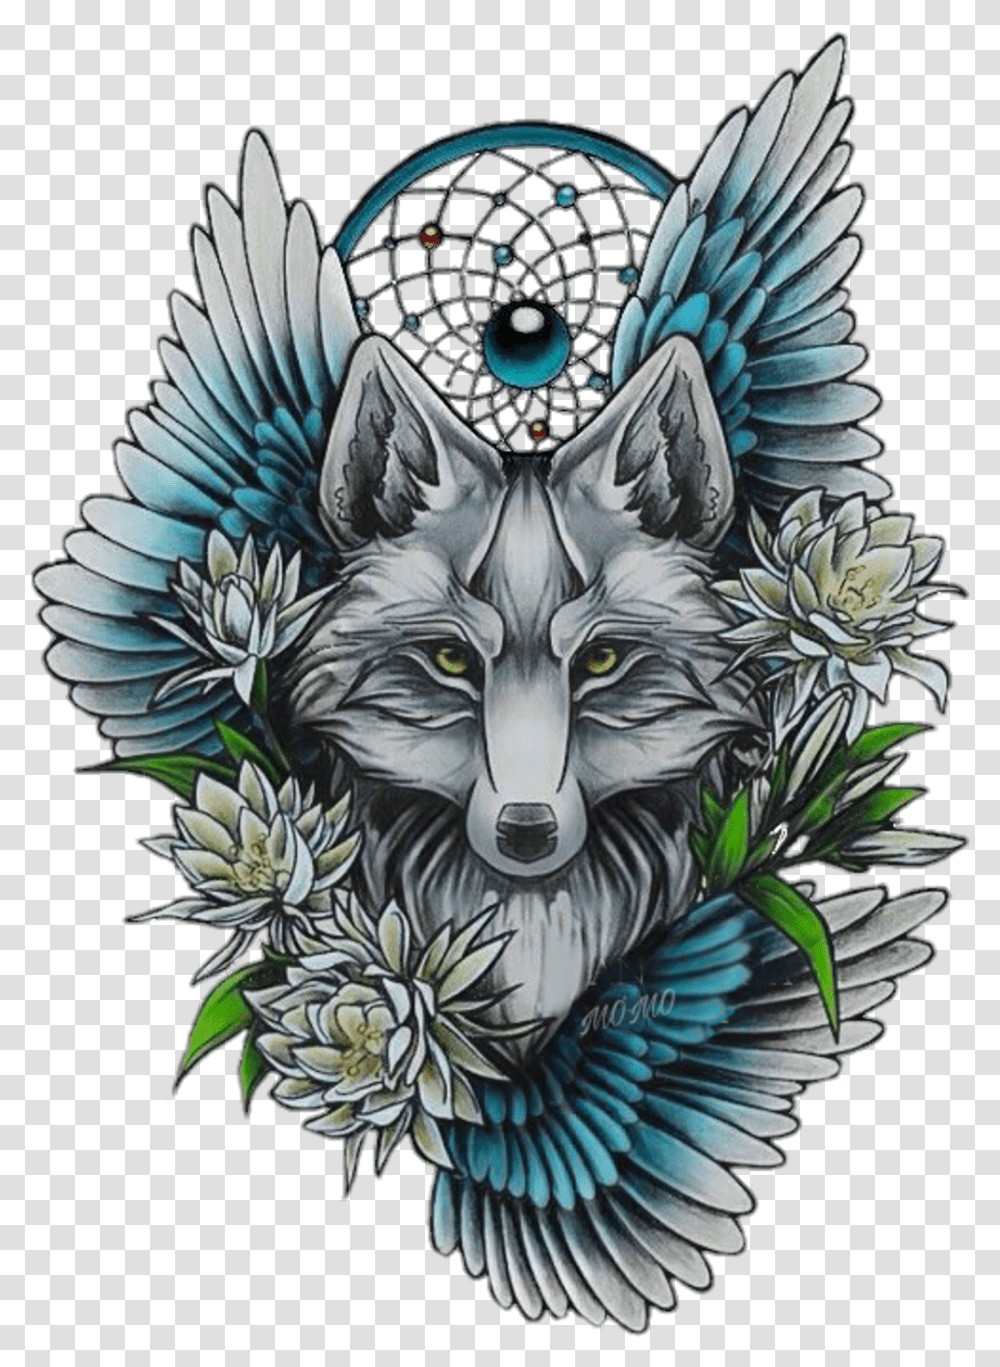 Wolf With Flowers Tattoo Hd Download Tattoo Artist Sketch, Bird, Animal, Emblem Transparent Png